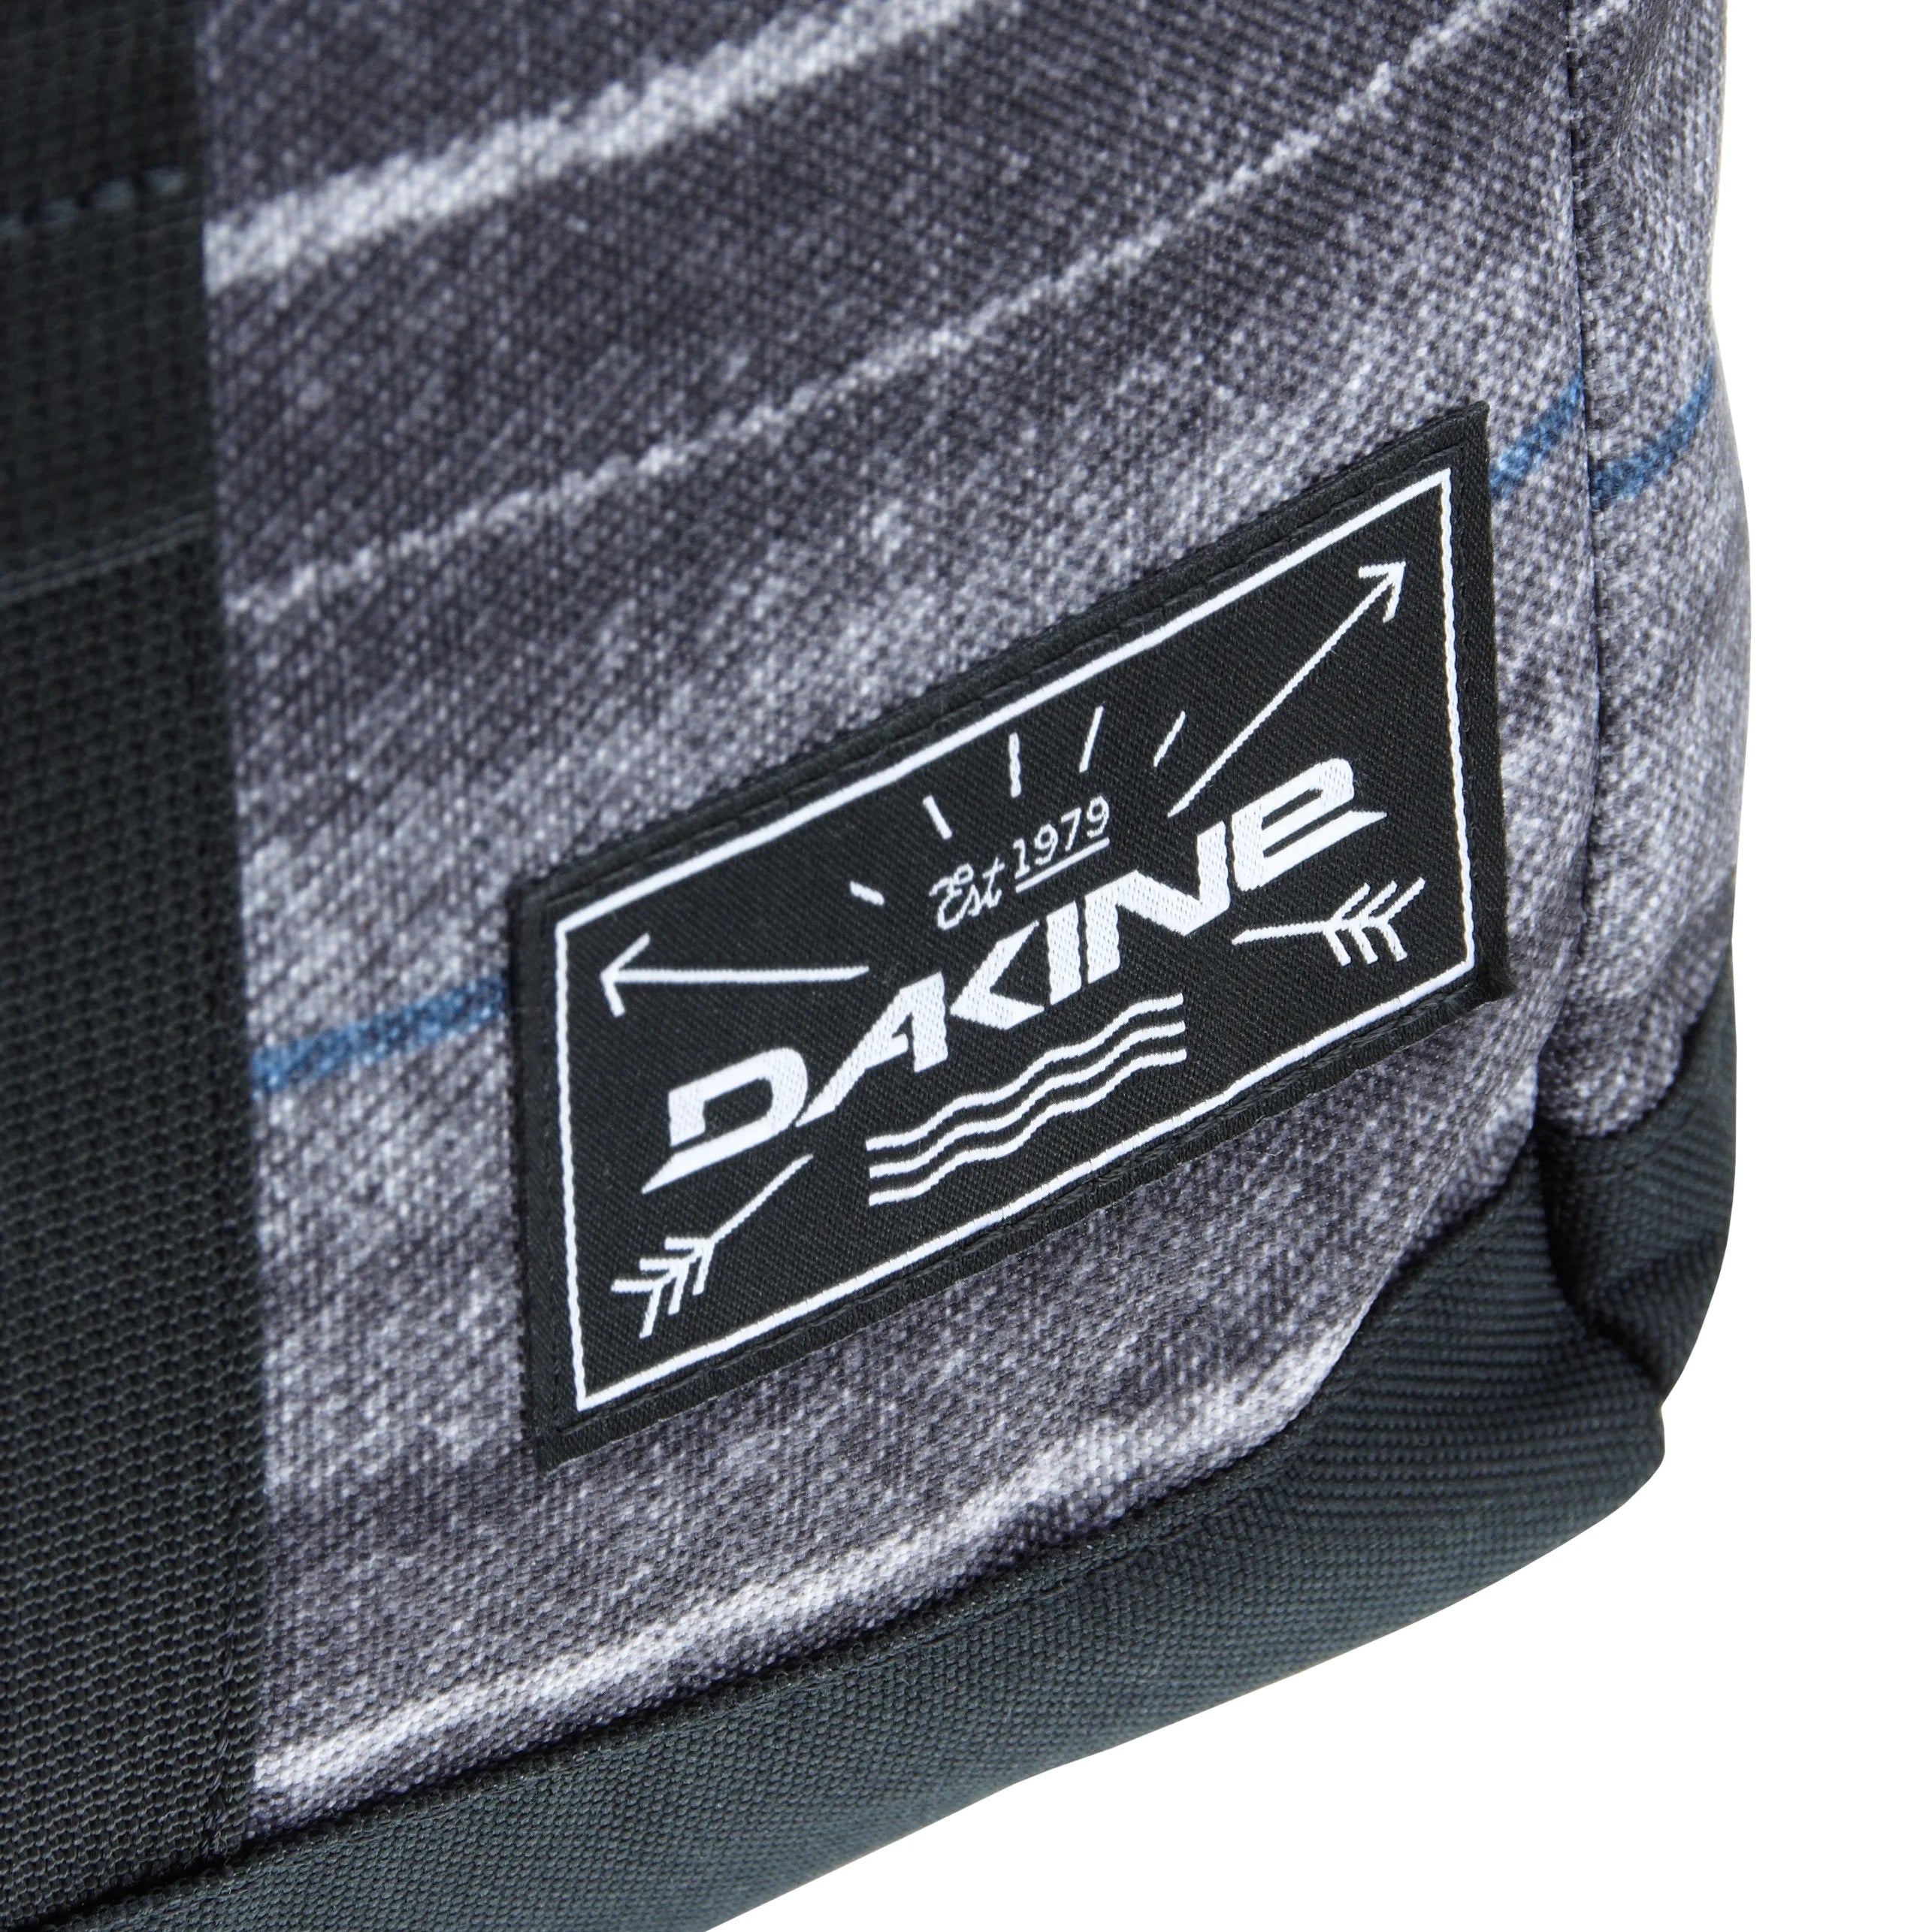 Dakine Boys Packs Range Laptop Backpack 48 cm - tradewinds